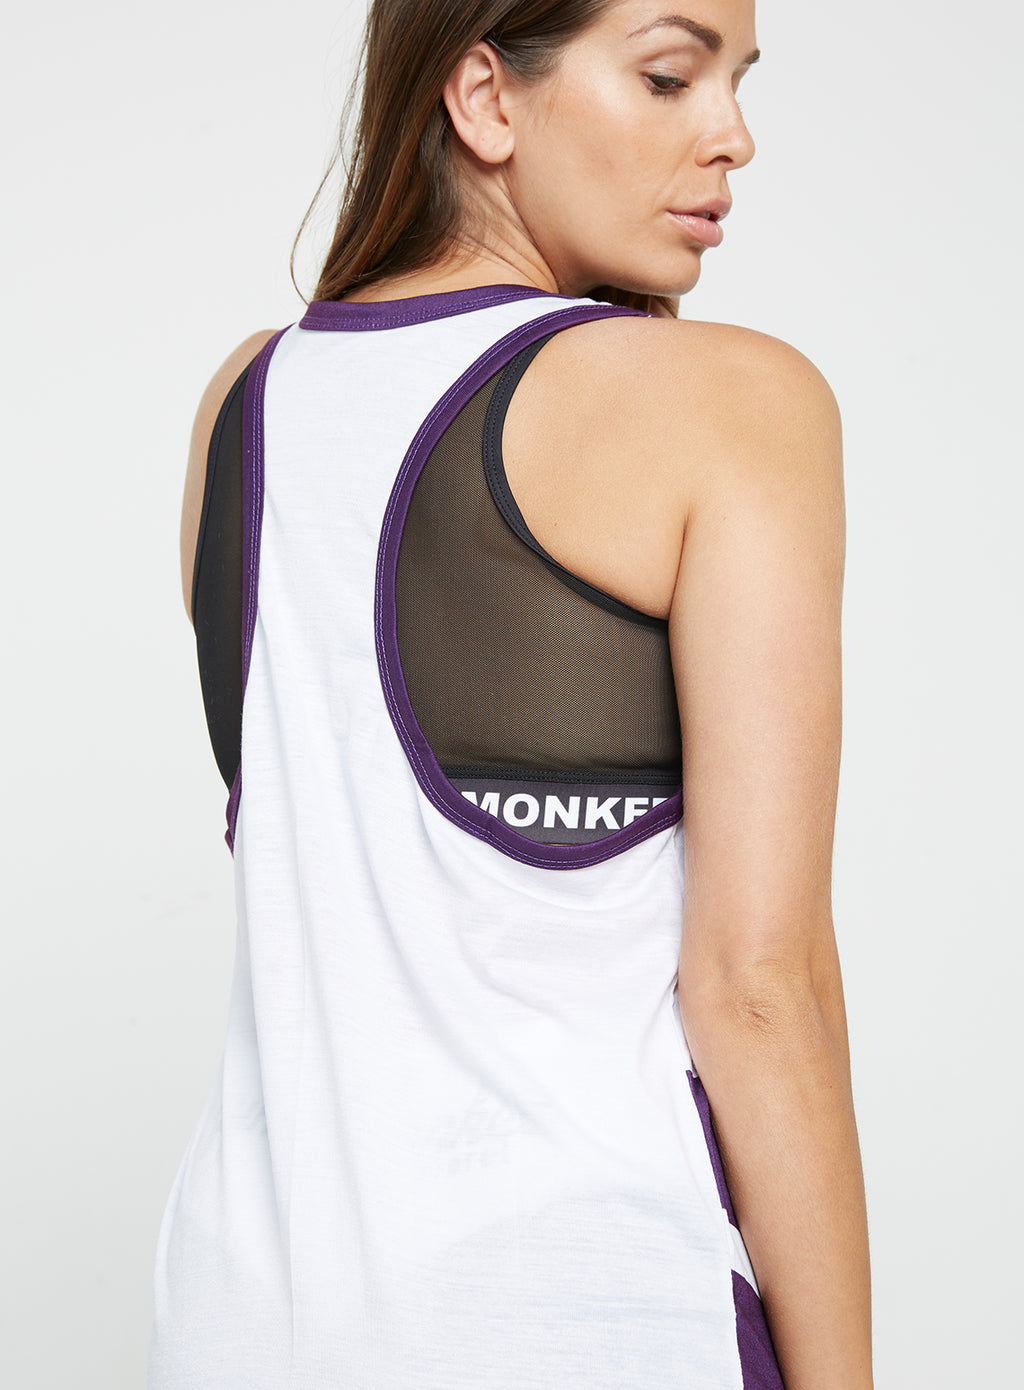 Gym Monkee - Ladies White and Purple Vest SHOULDER